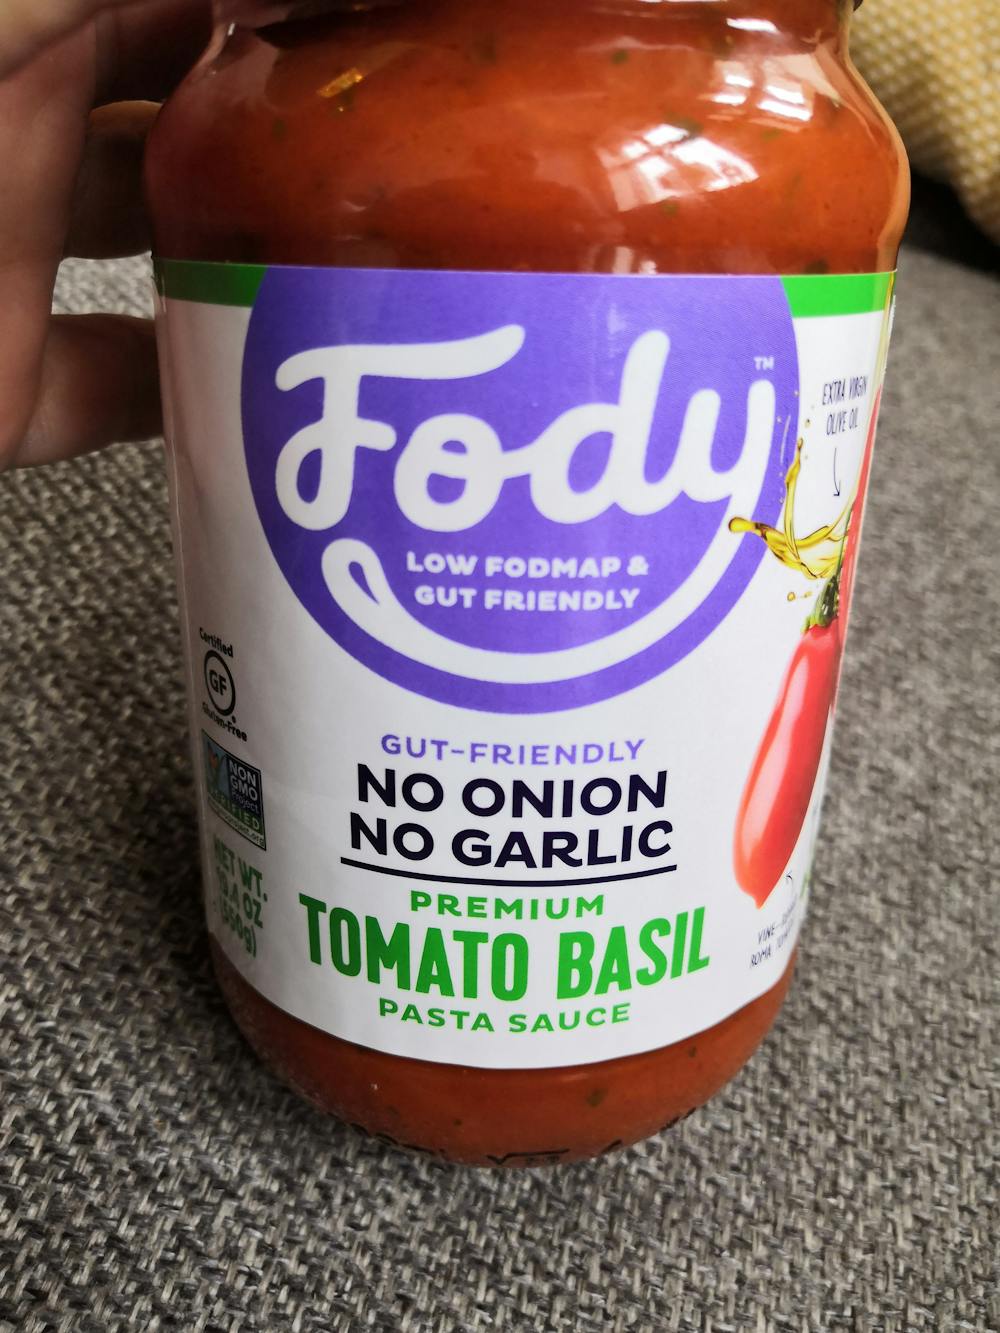 Premium tomato basil pasta sauce, Fody